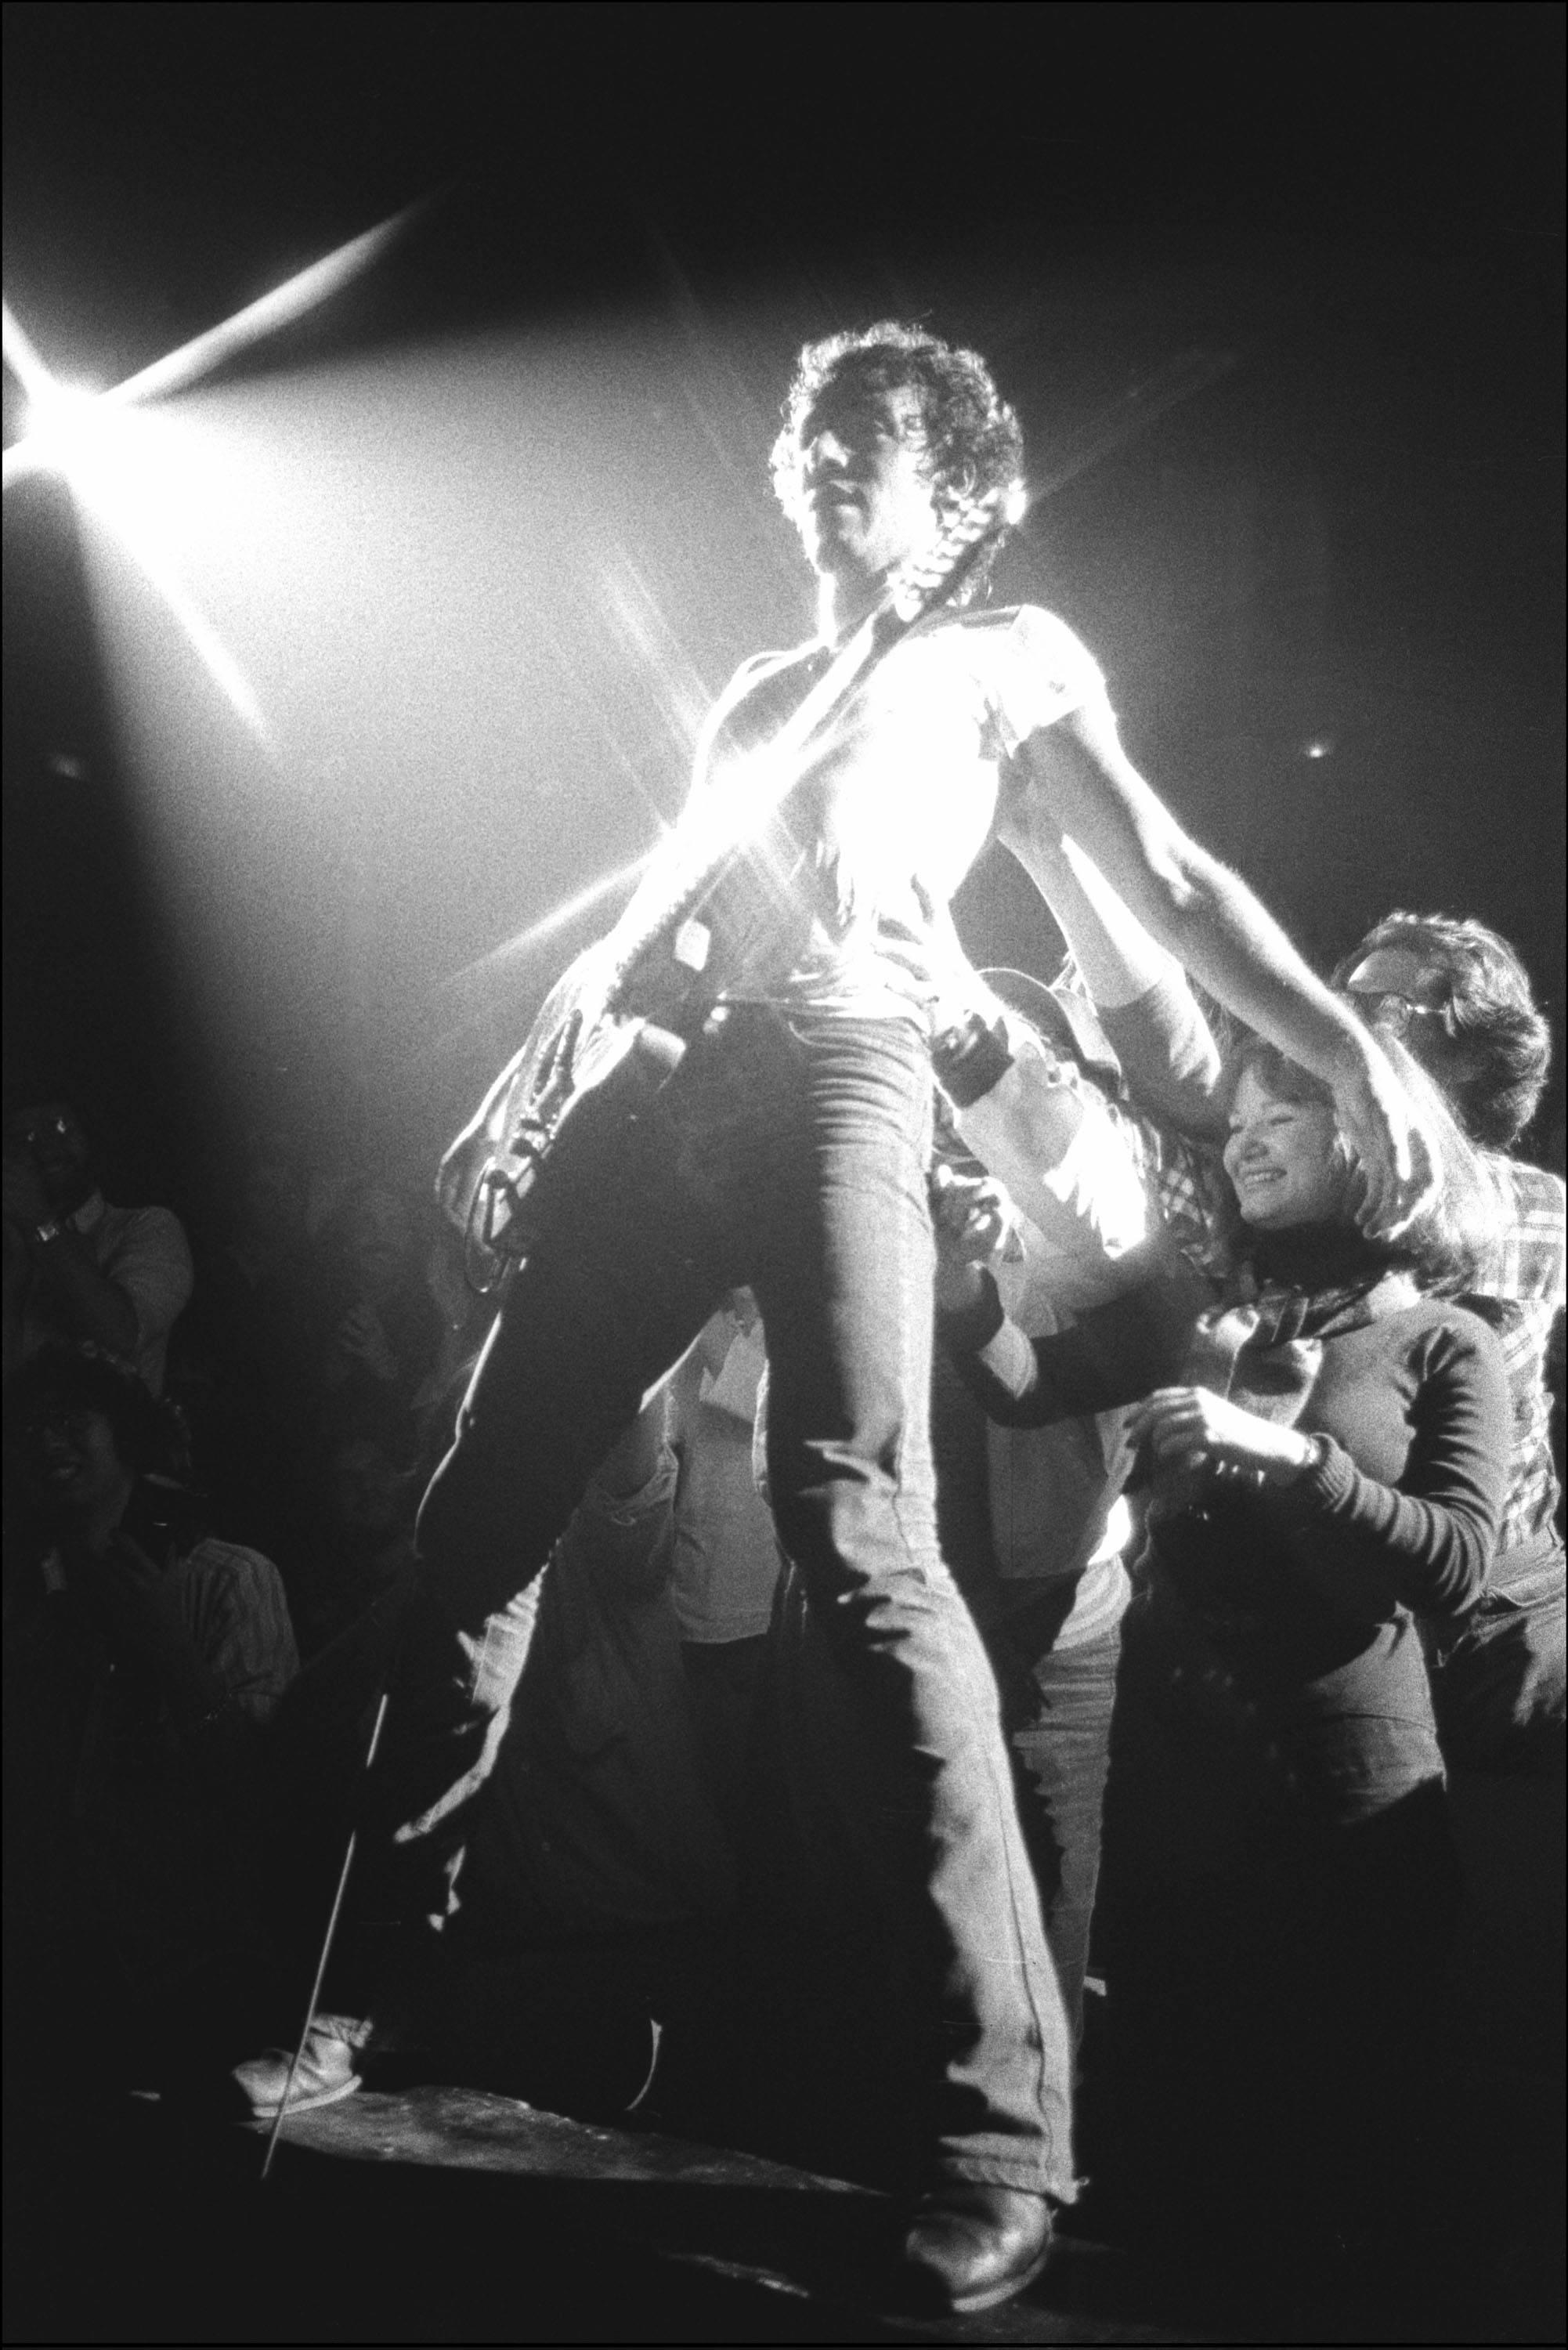 Allan Tannenbaum Black and White Photograph - Bruce Springsteen at the Palladium, 1976